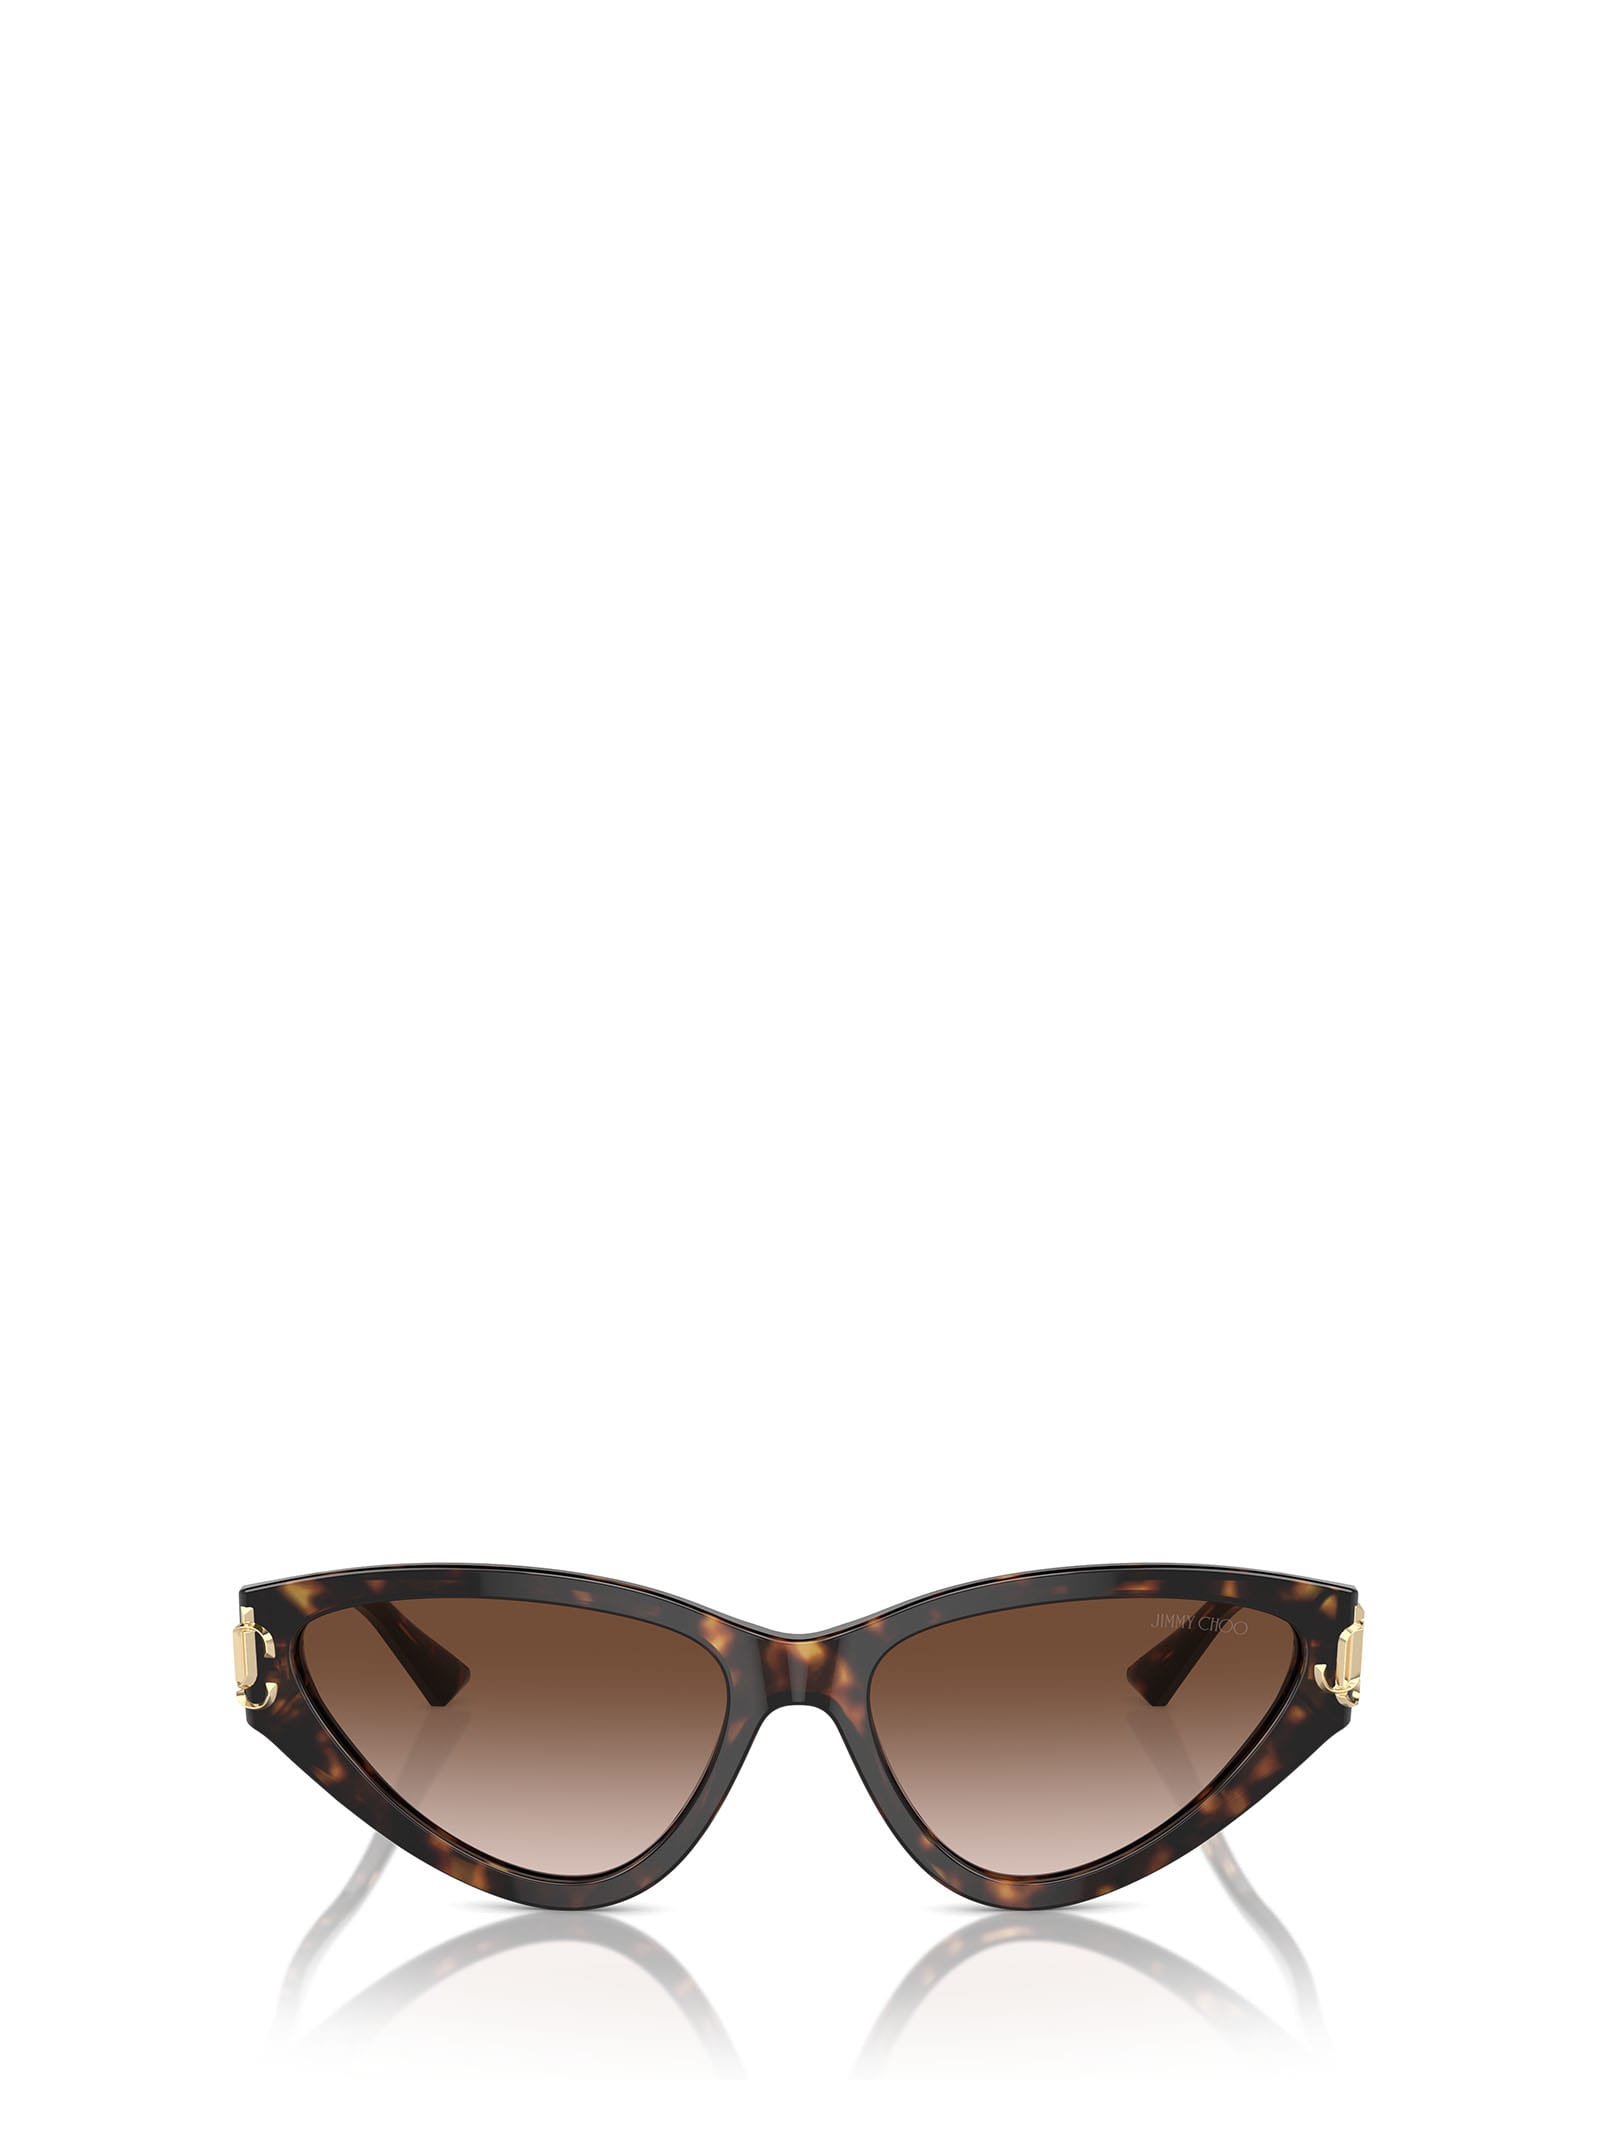 Jc5019 Havana Sunglasses